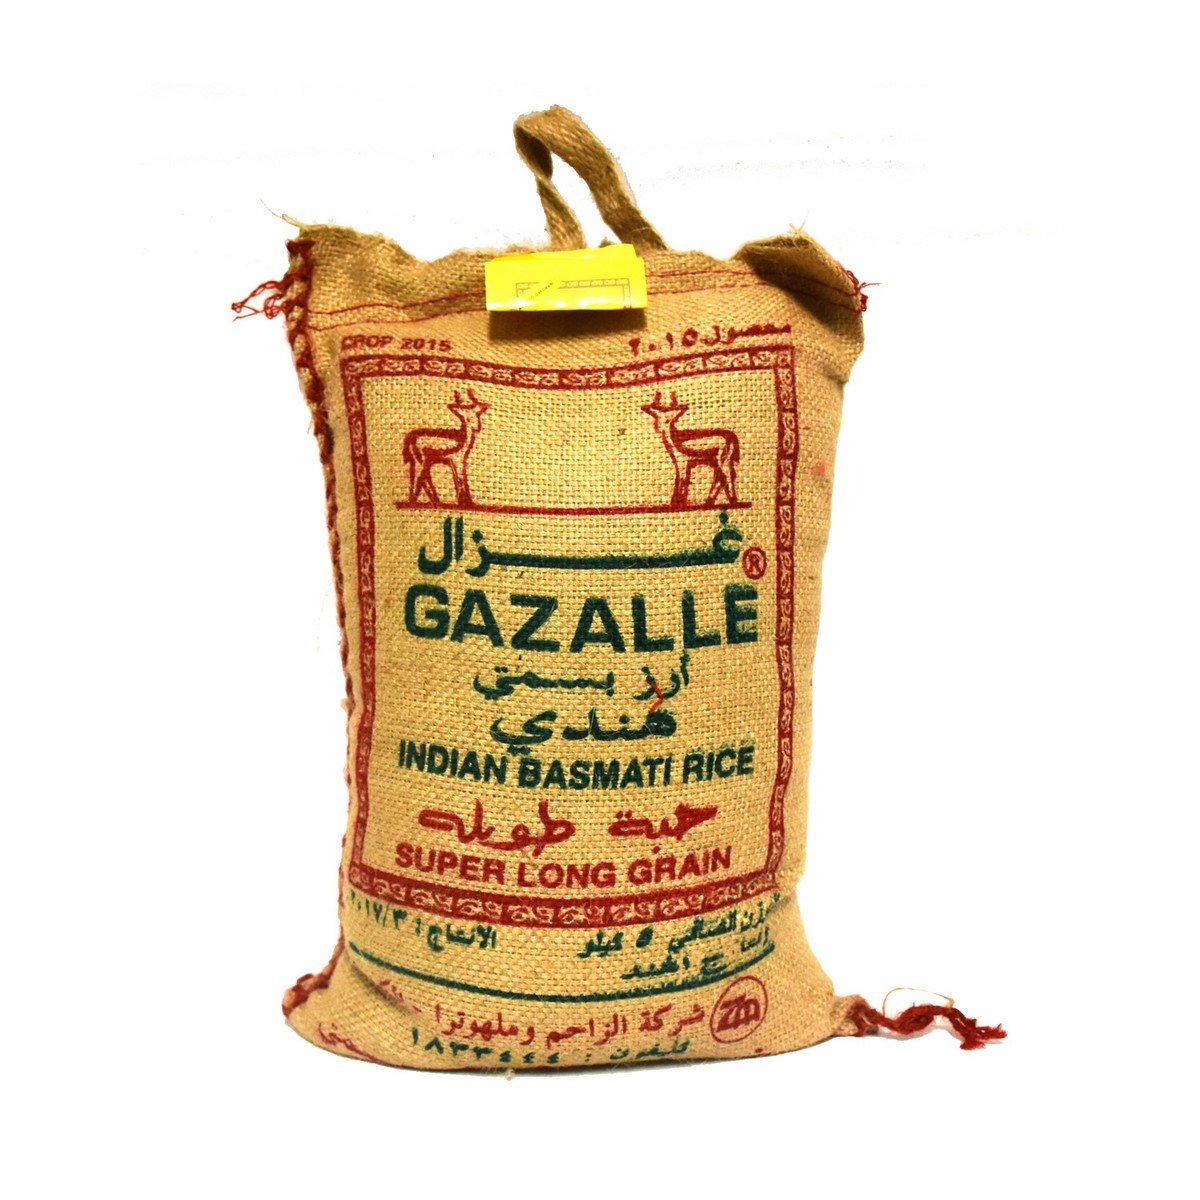 Gazelle Gazalle Indian Basmati Rice 5kg